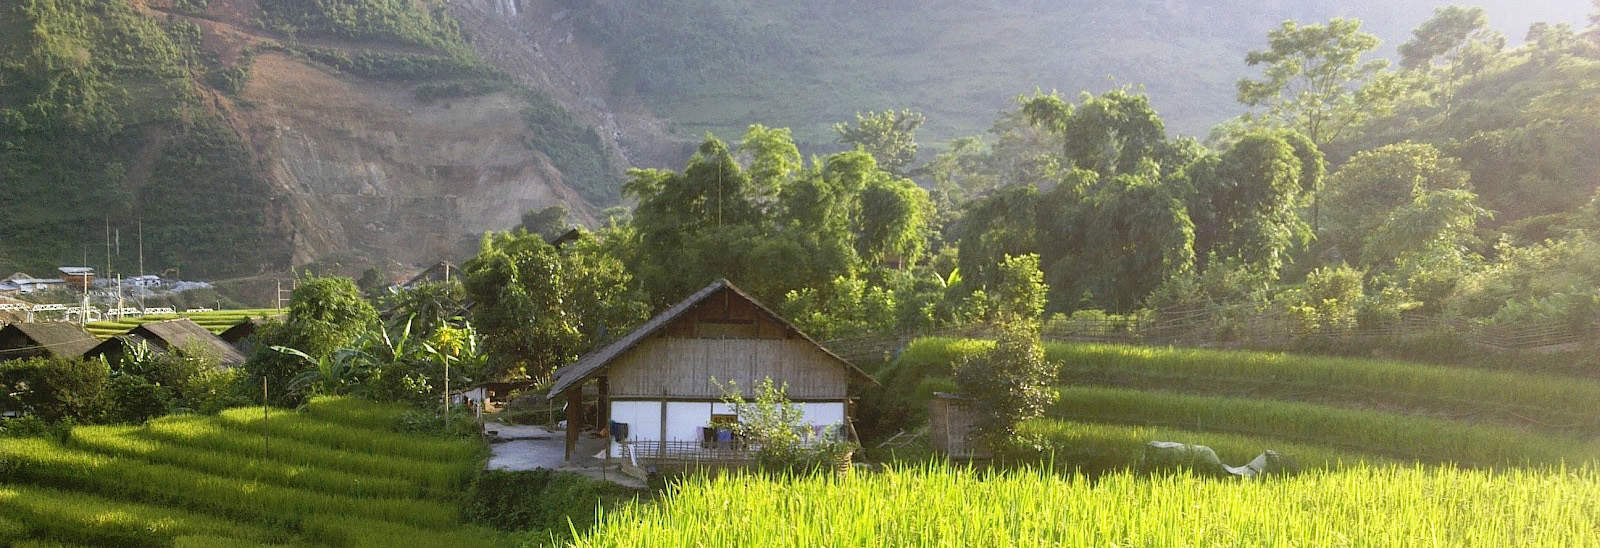 Ban Ho Village in Sapa, Lao Cai